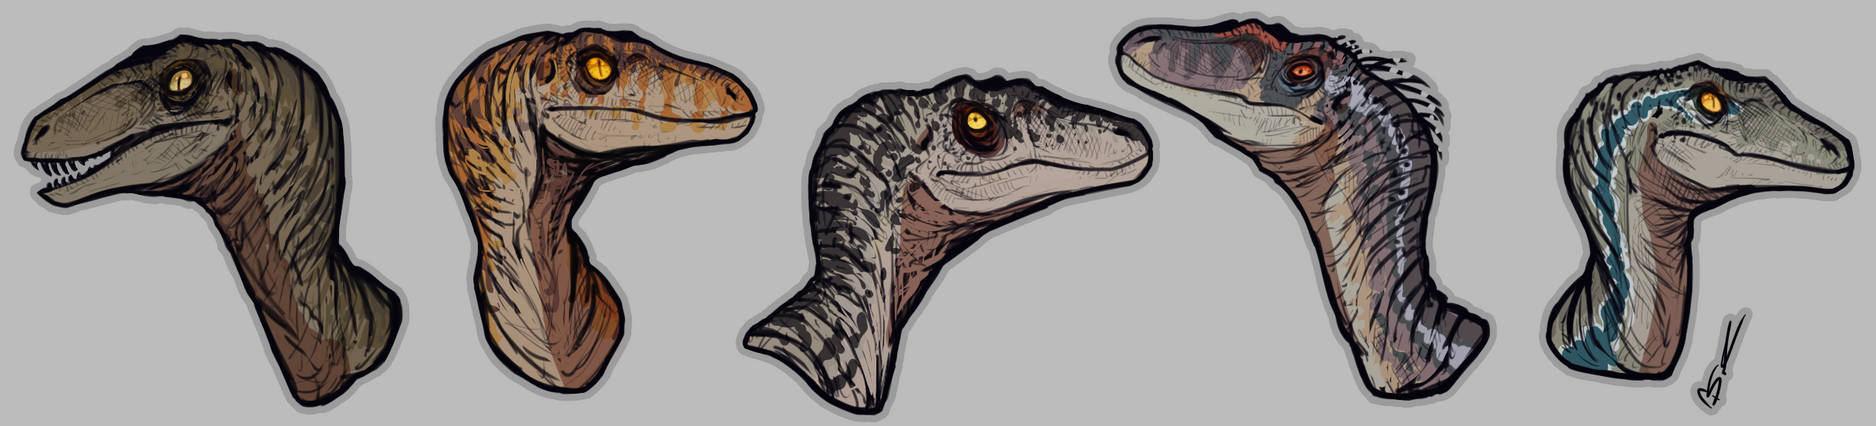 Jurassic Park Raptors By Bluegekk0 On Deviantart 